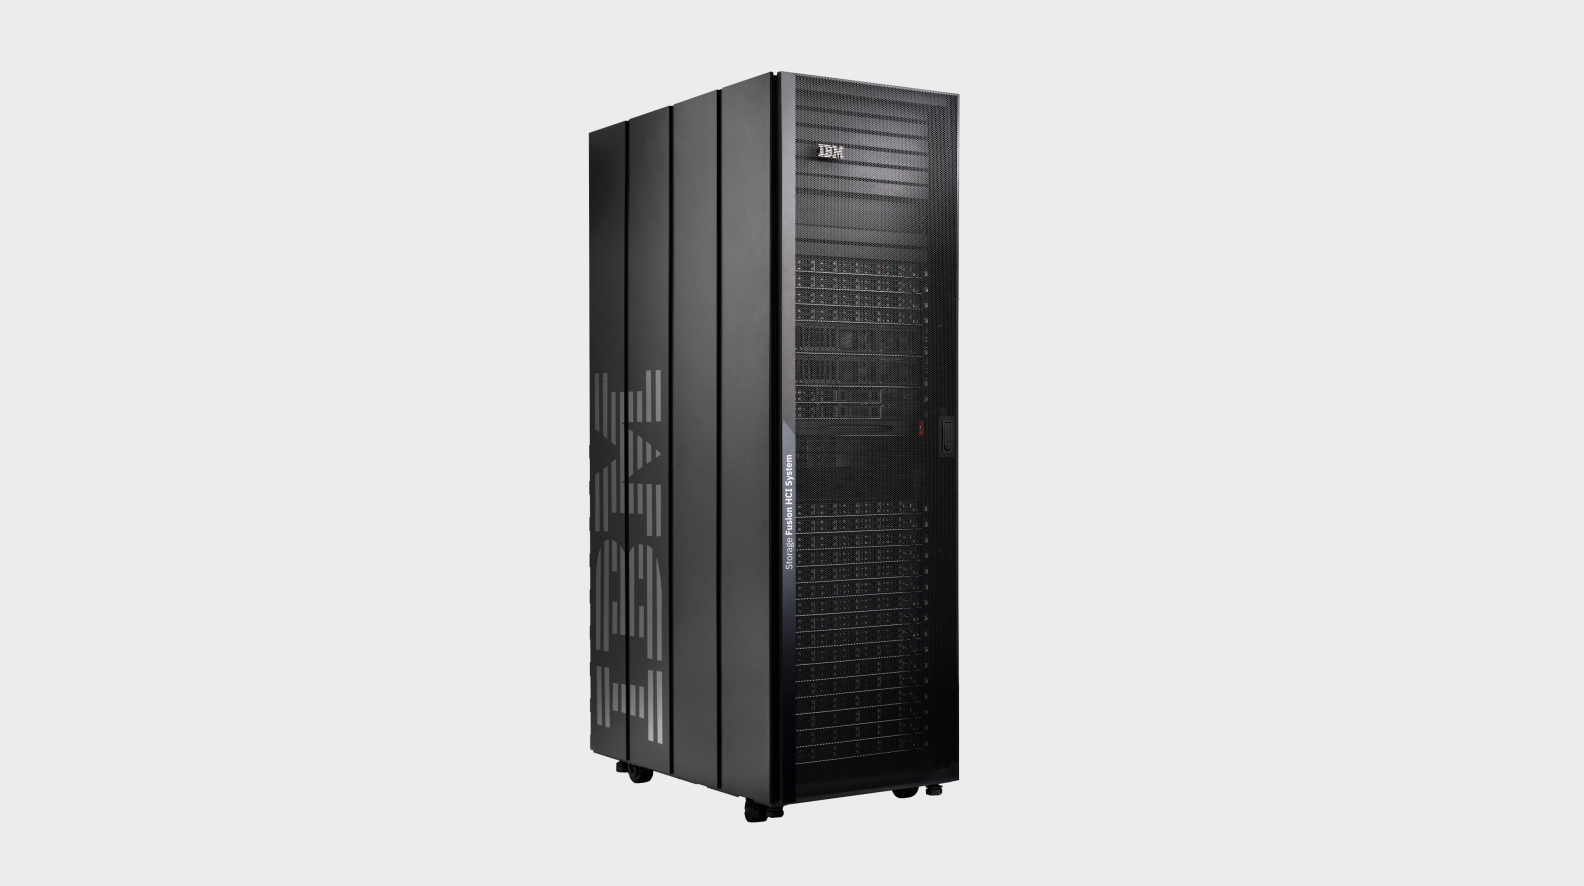 IBM Storage Fusion